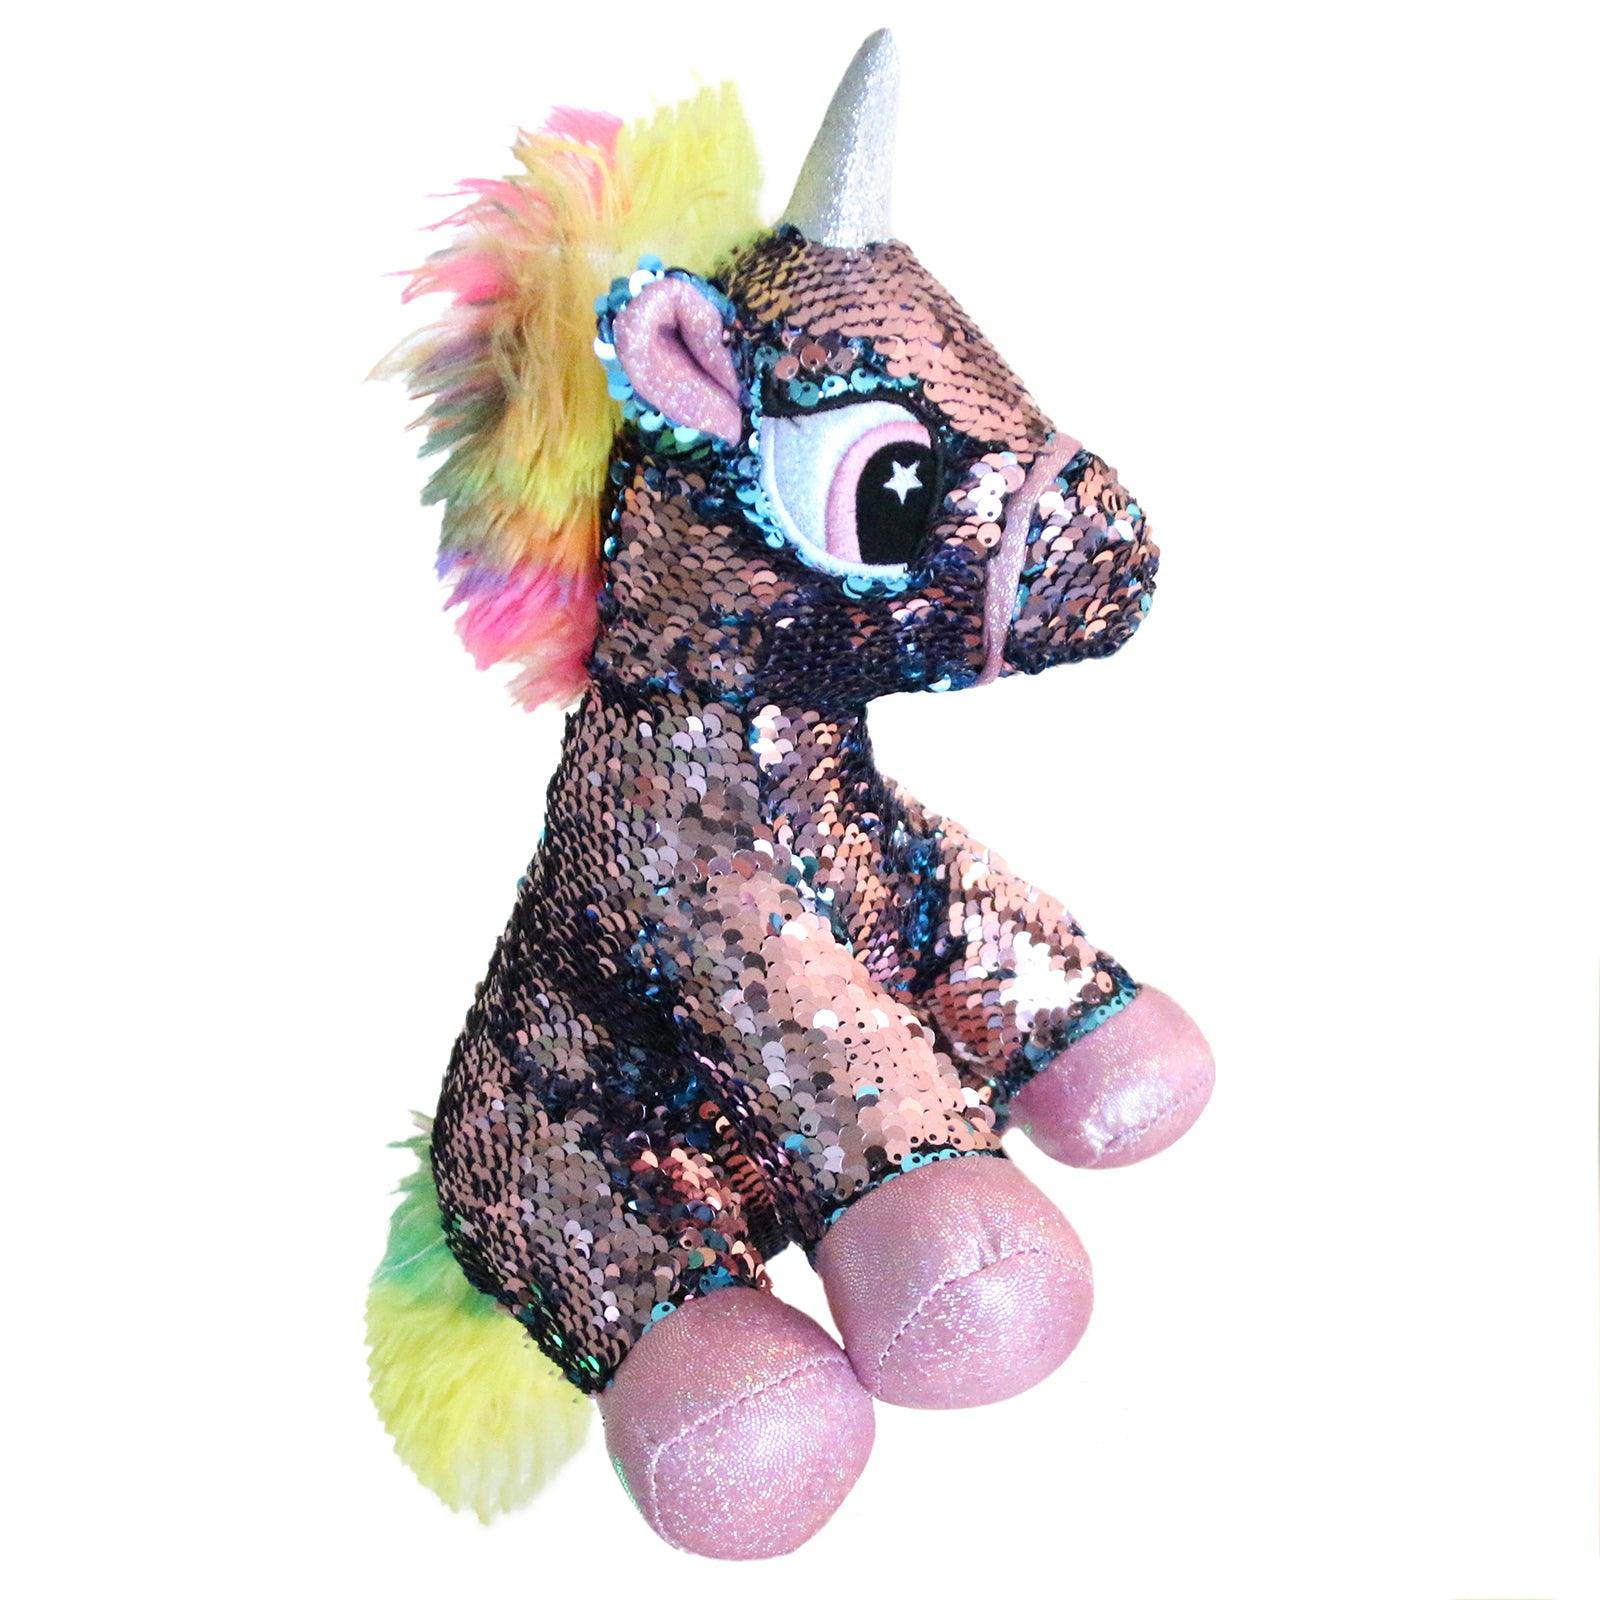 Athoinsu Flip Sequin Stuffed Unicorn Plush Toy Holiday for Kids Toddlers, Blue, 13'' - Glow Guards